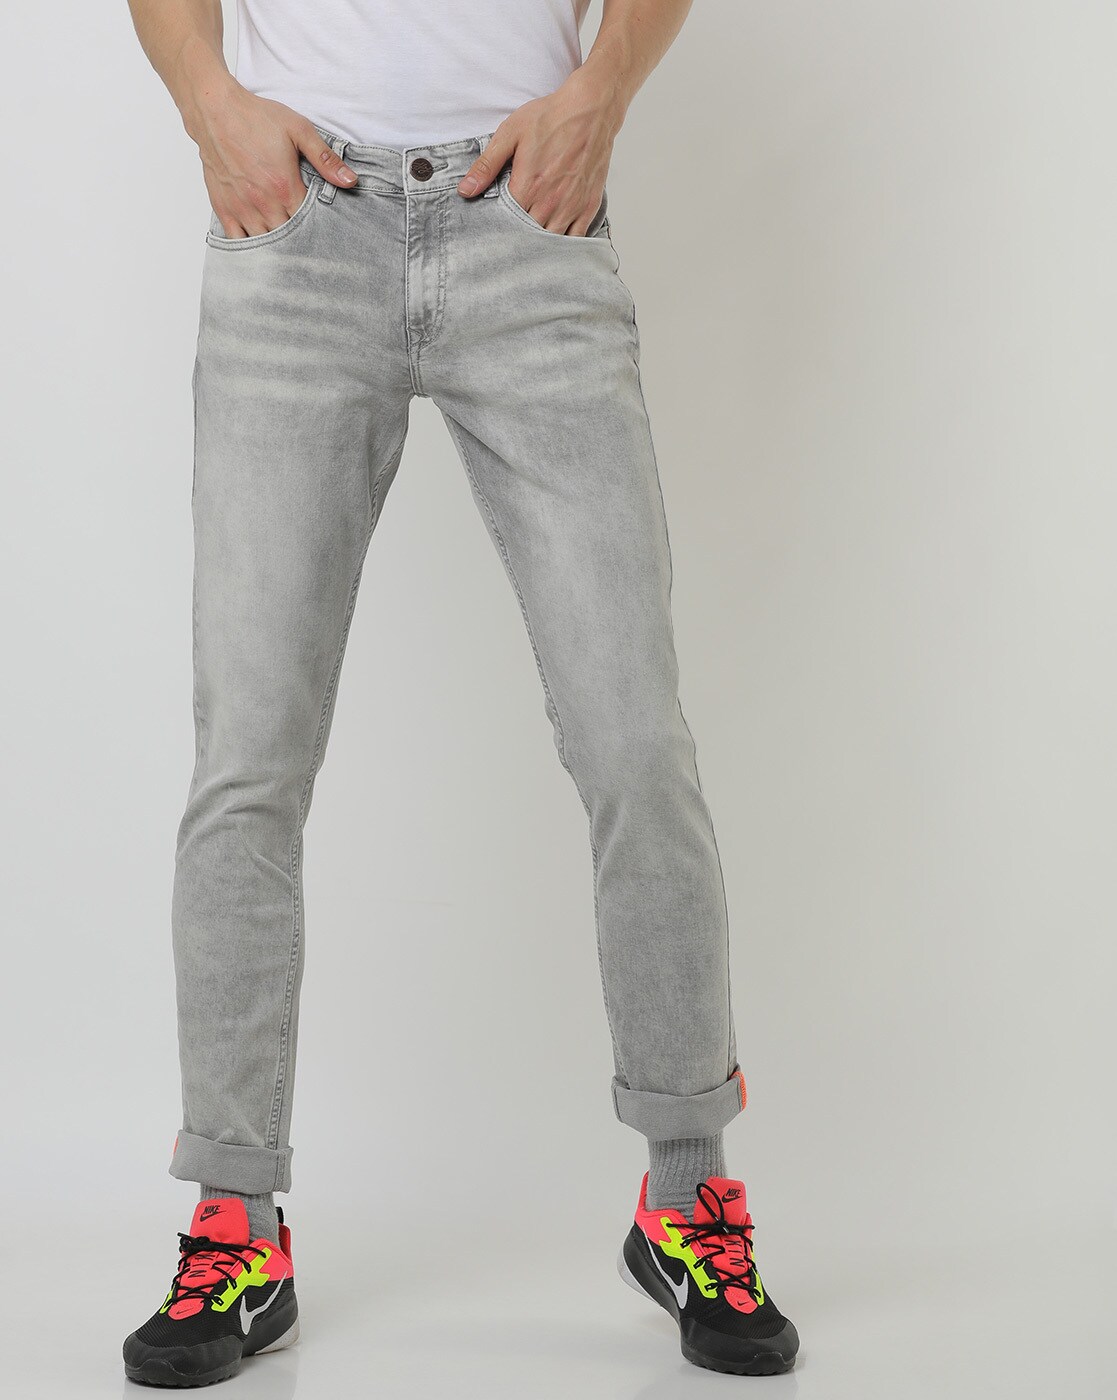 light gray skinny jeans